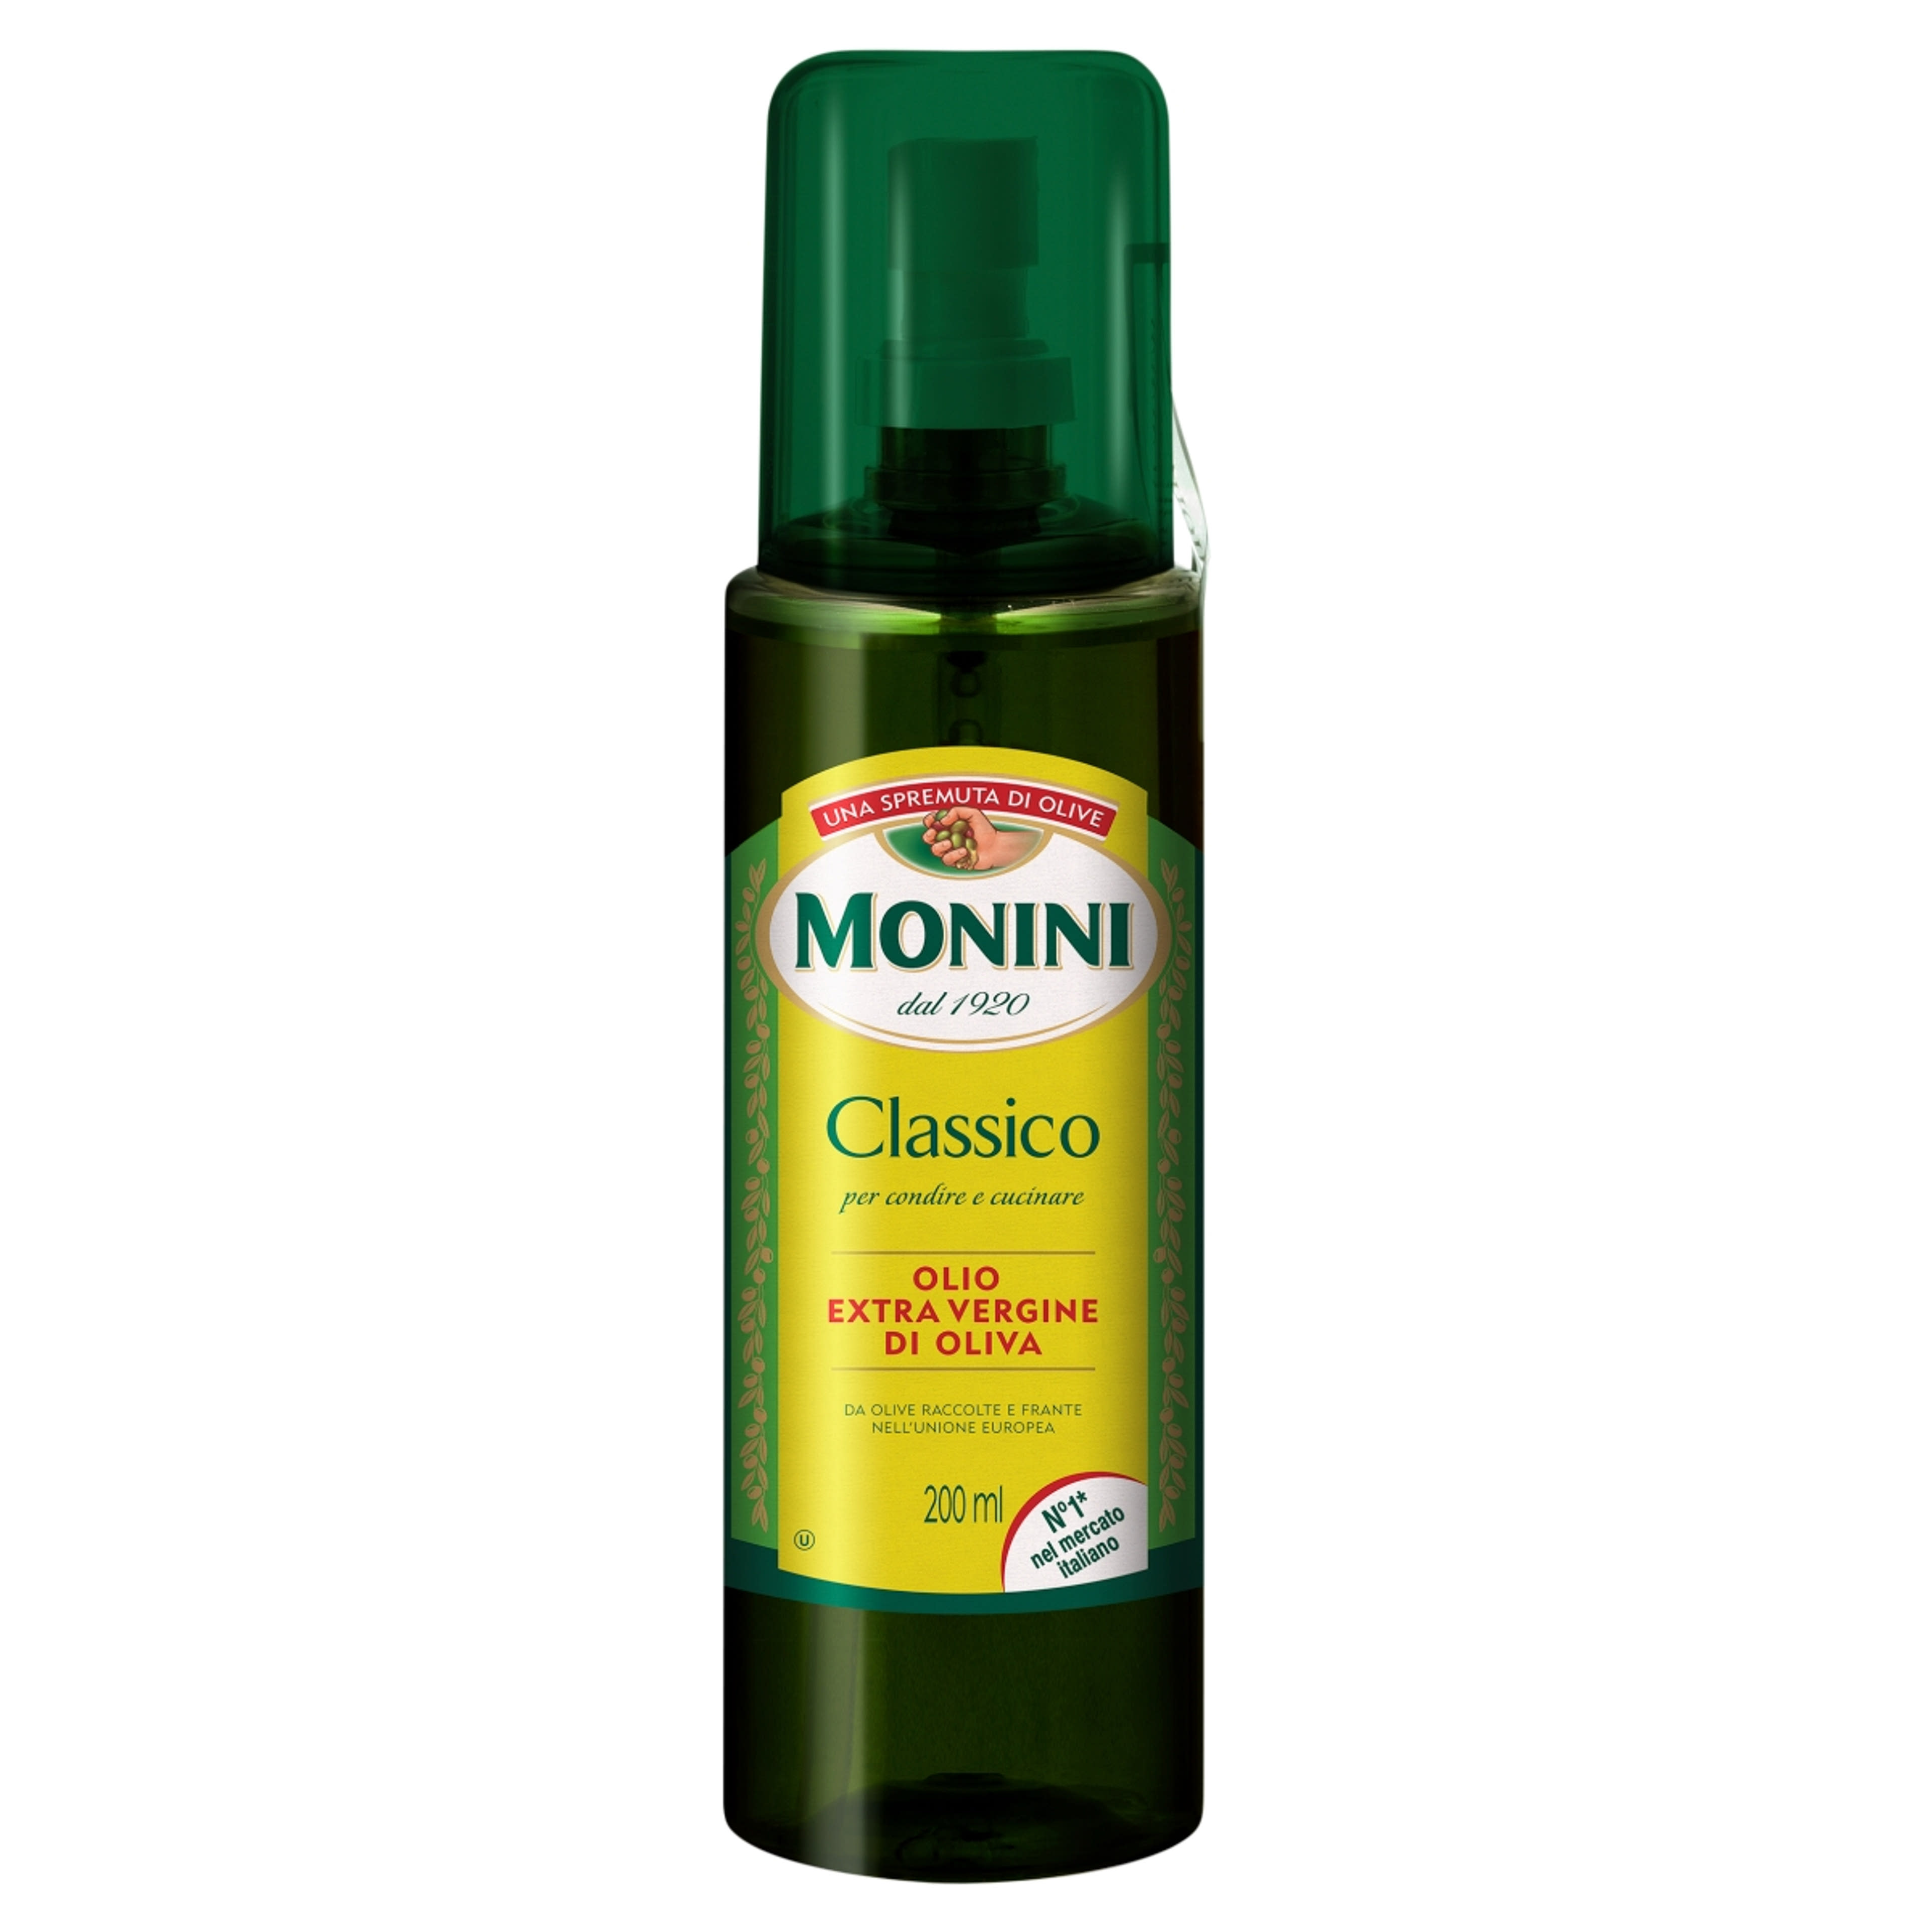 Monini classico extra szűz olivaolaj spray - 200 ml-1